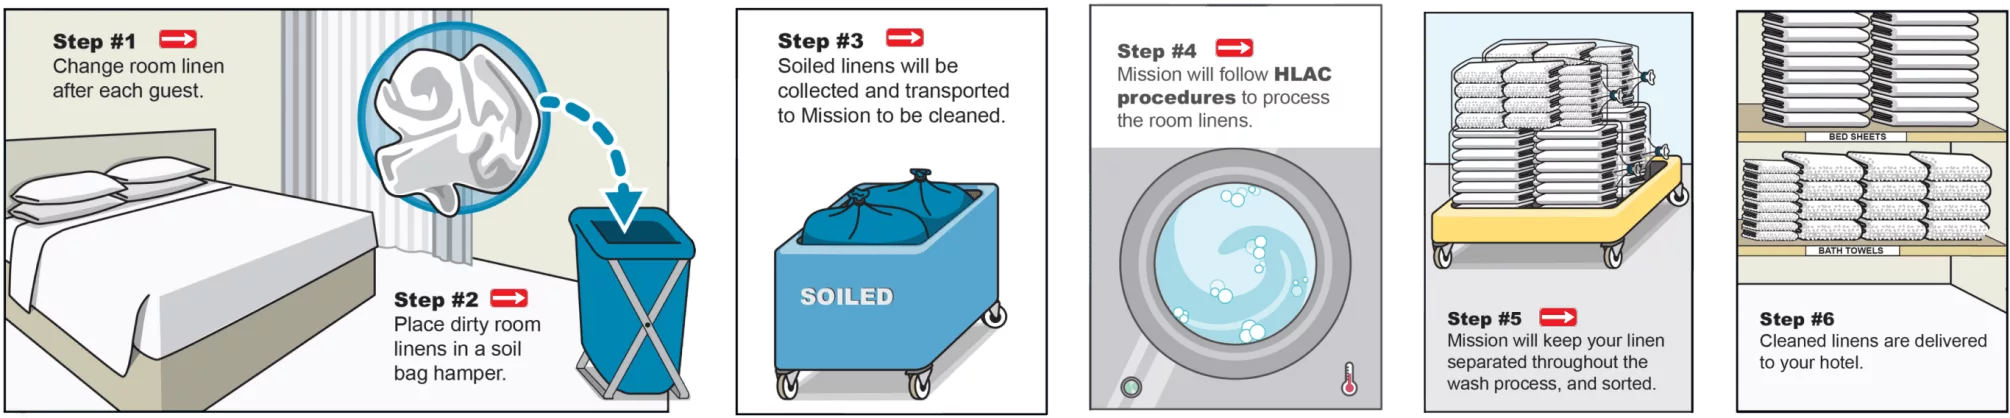 Mission Linen 6 Step Laundry Service